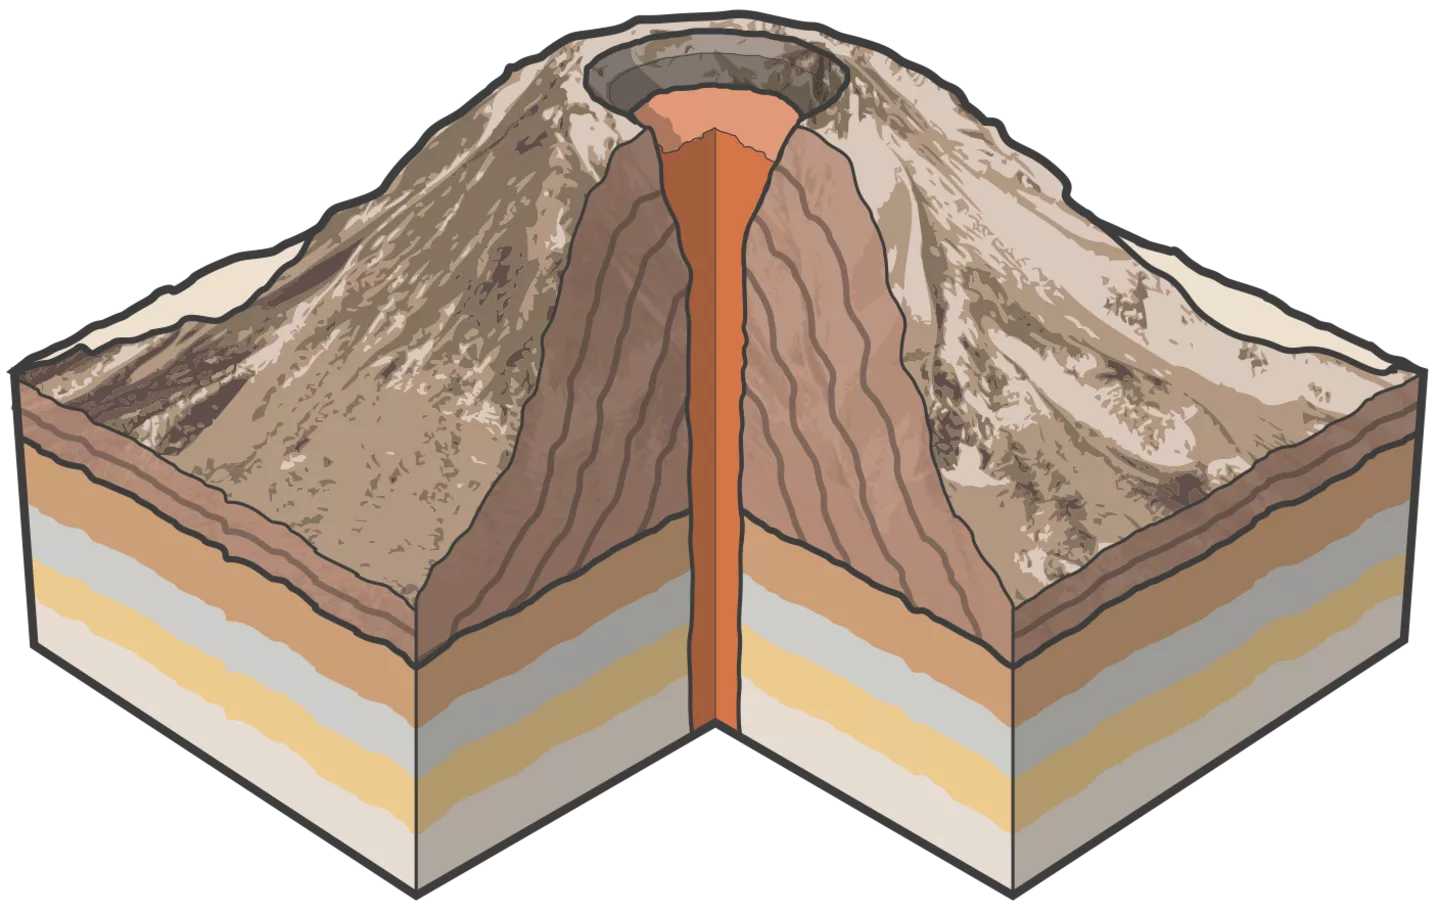 <ul><li><p>predominantly found on continents</p></li><li><p>made up of acidic lava</p></li><li><p>made of layers of cinder and ash</p></li><li><p>compact/small in size</p></li><li><p>highly violent and explosive</p></li><li><p>associated with pyroclastic flows</p></li><li><p>fast cooling = can cause clogged neck ex. Mt. Fuji</p></li></ul>